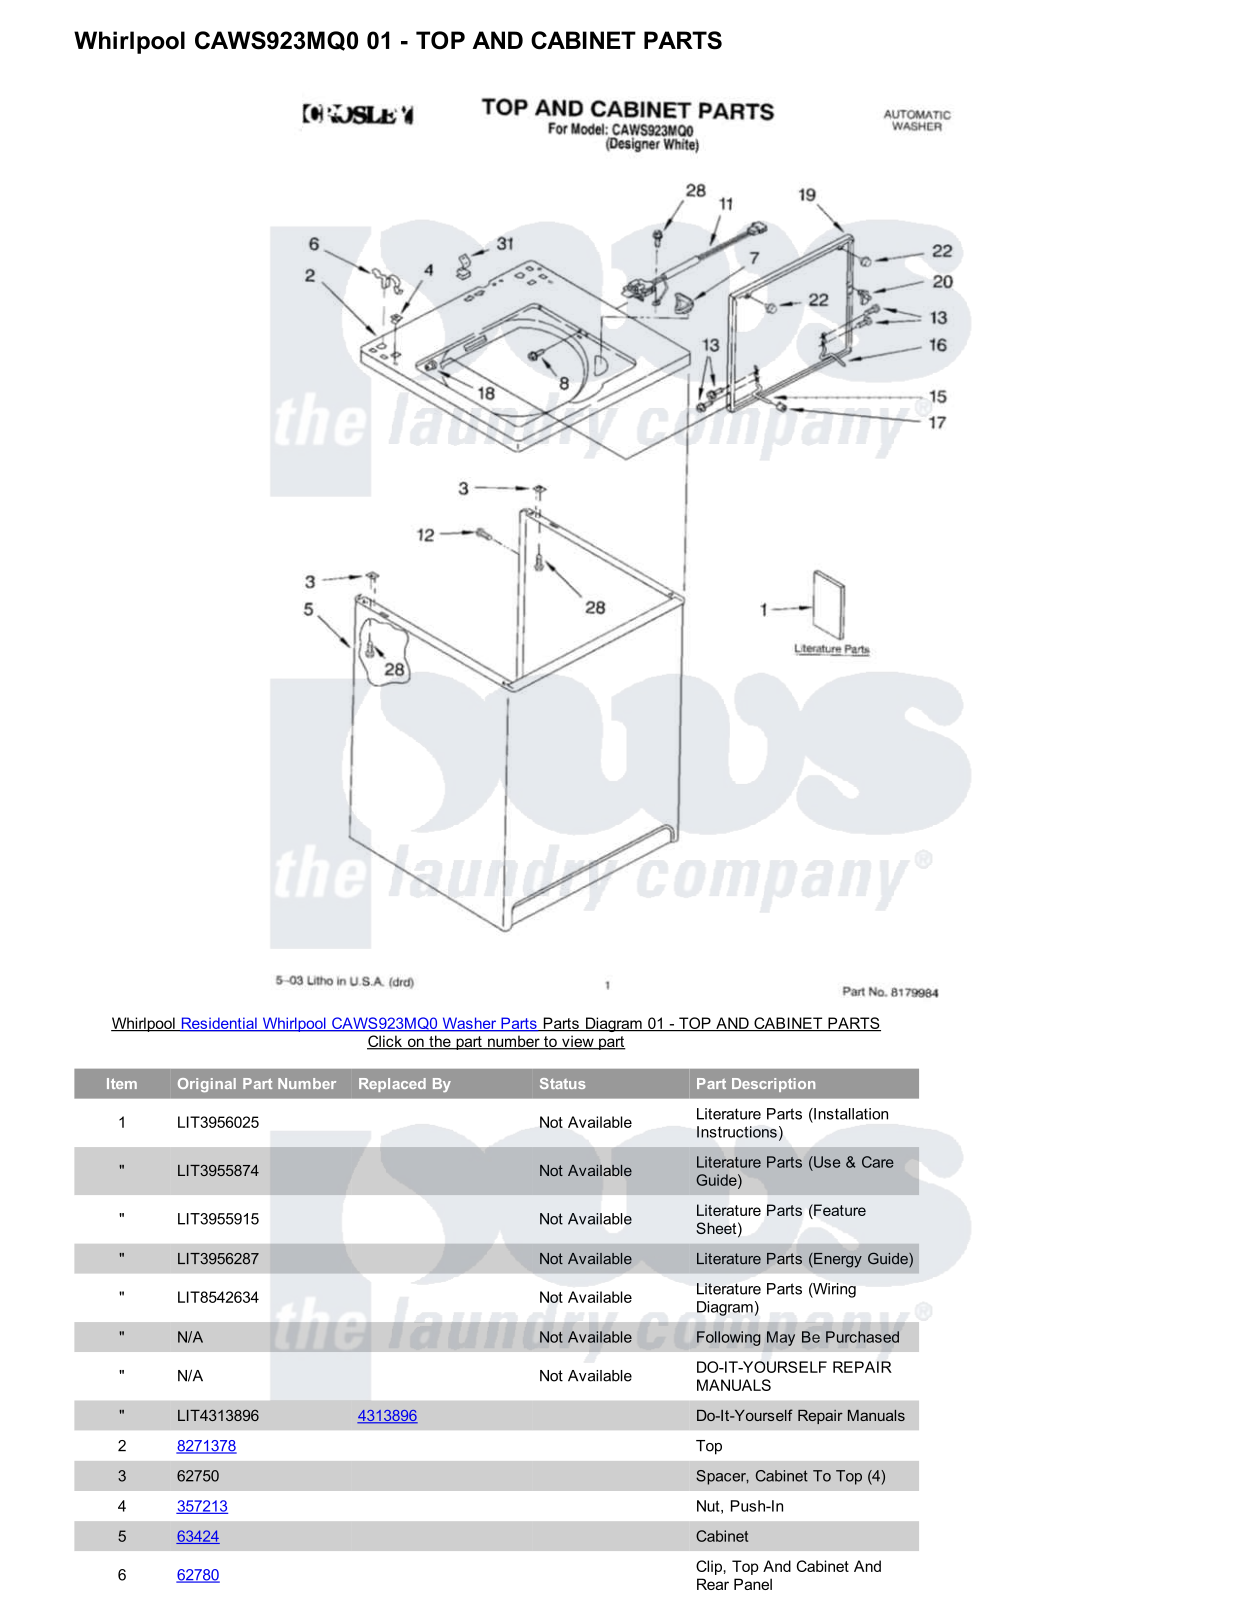 Whirlpool CAWS923MQ0 Parts Diagram